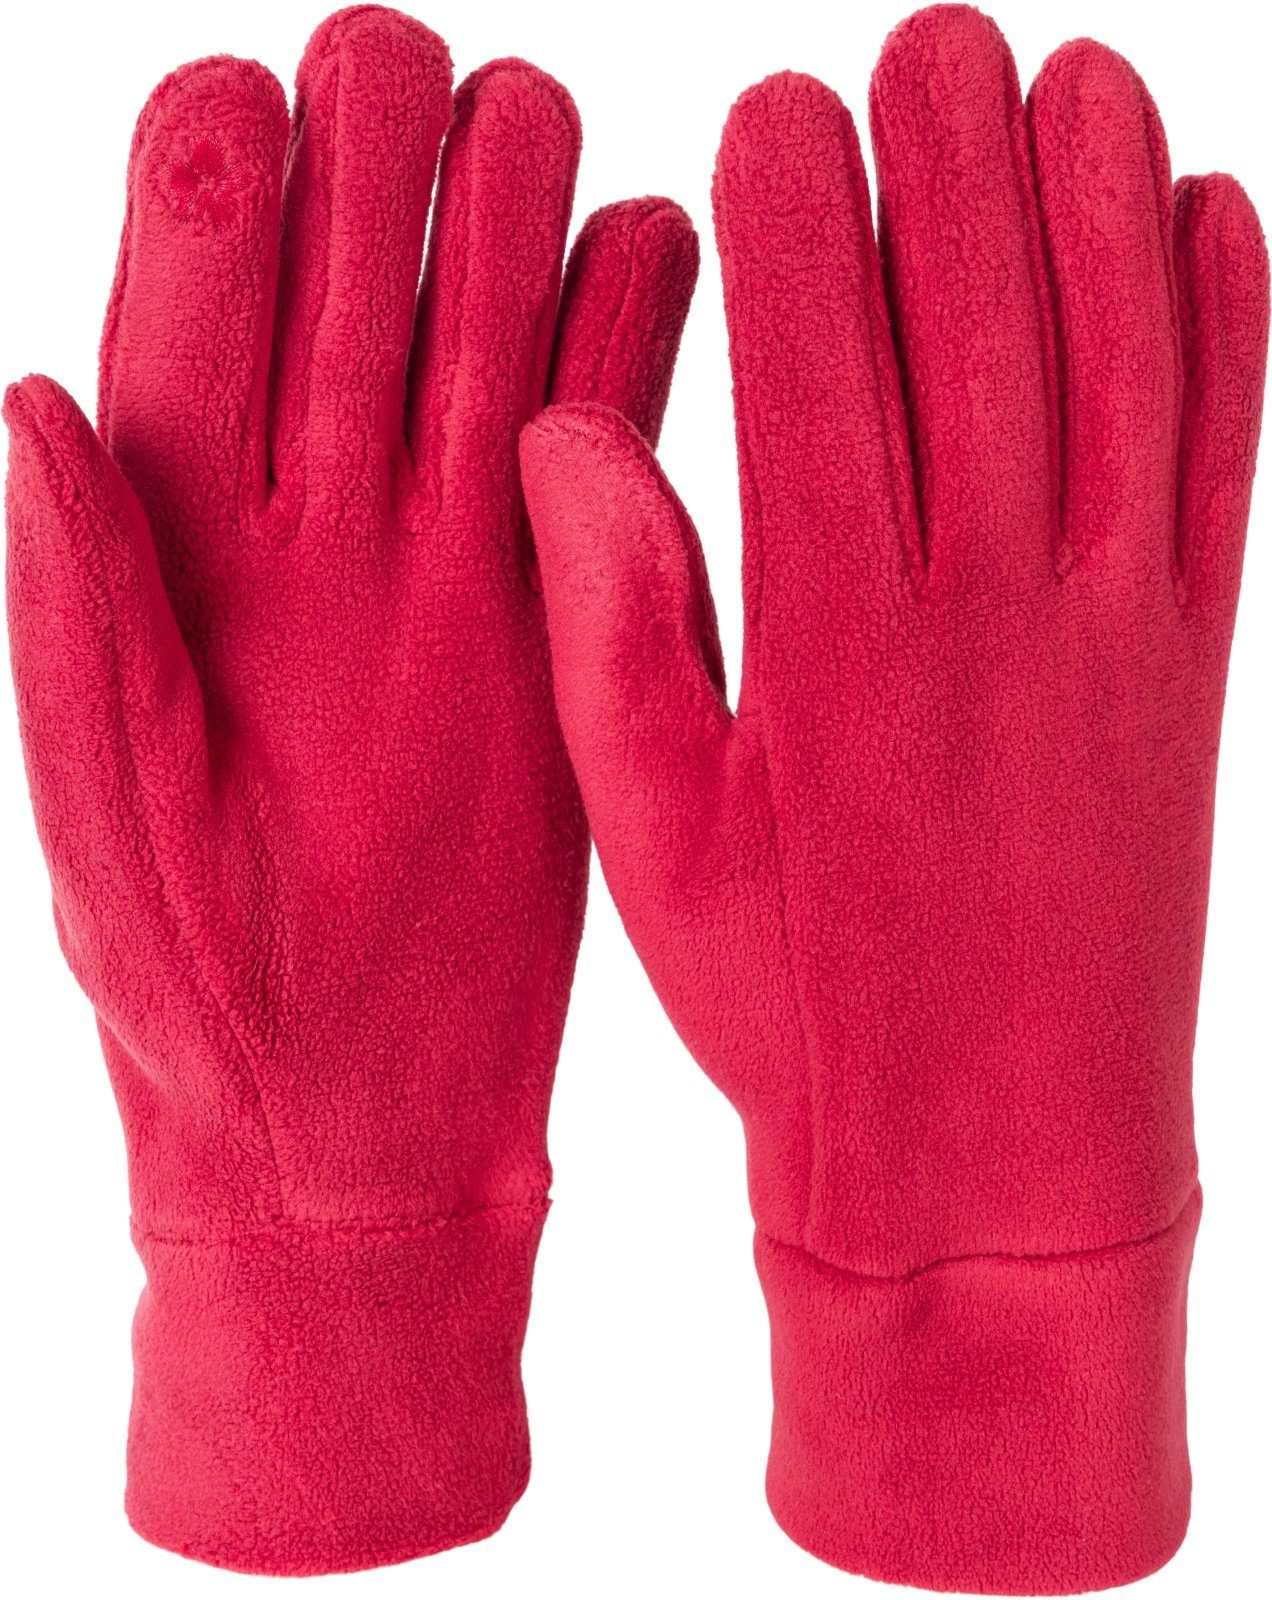 styleBREAKER Fleecehandschuhe Einfarbige Touchscreen Fleece Handschuhe Weinrot